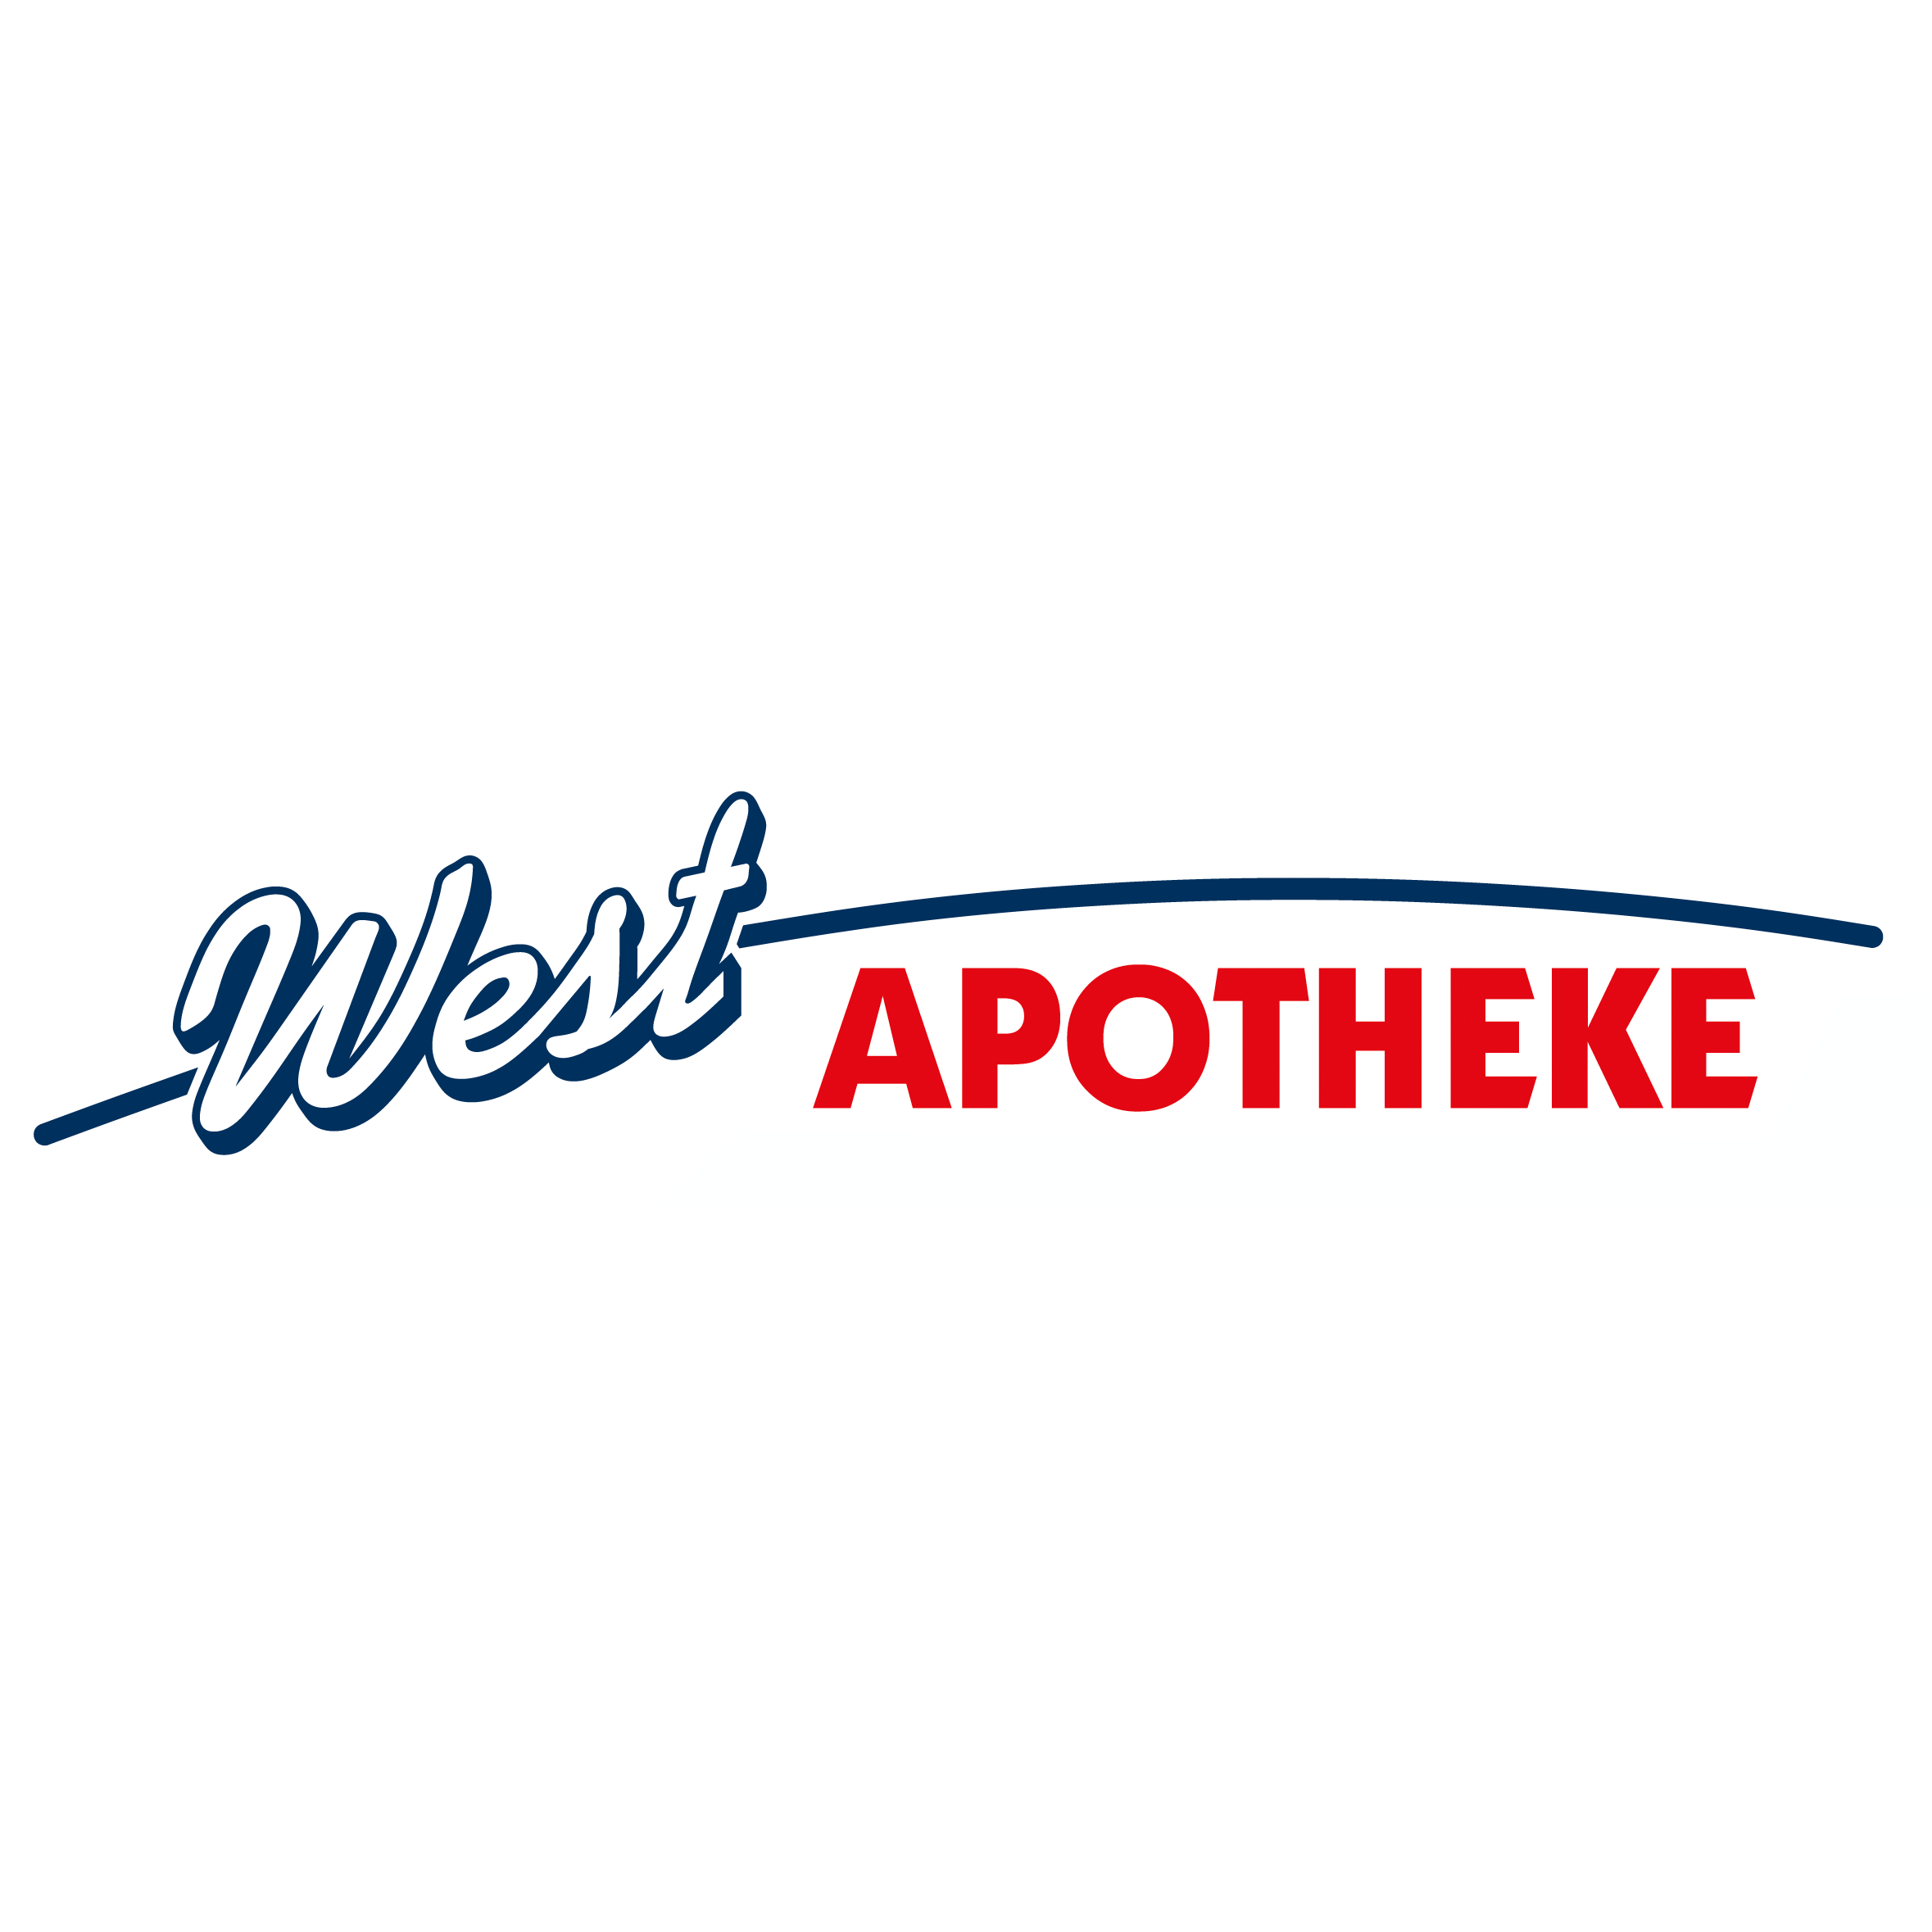 Logo Logo der West-Apotheke